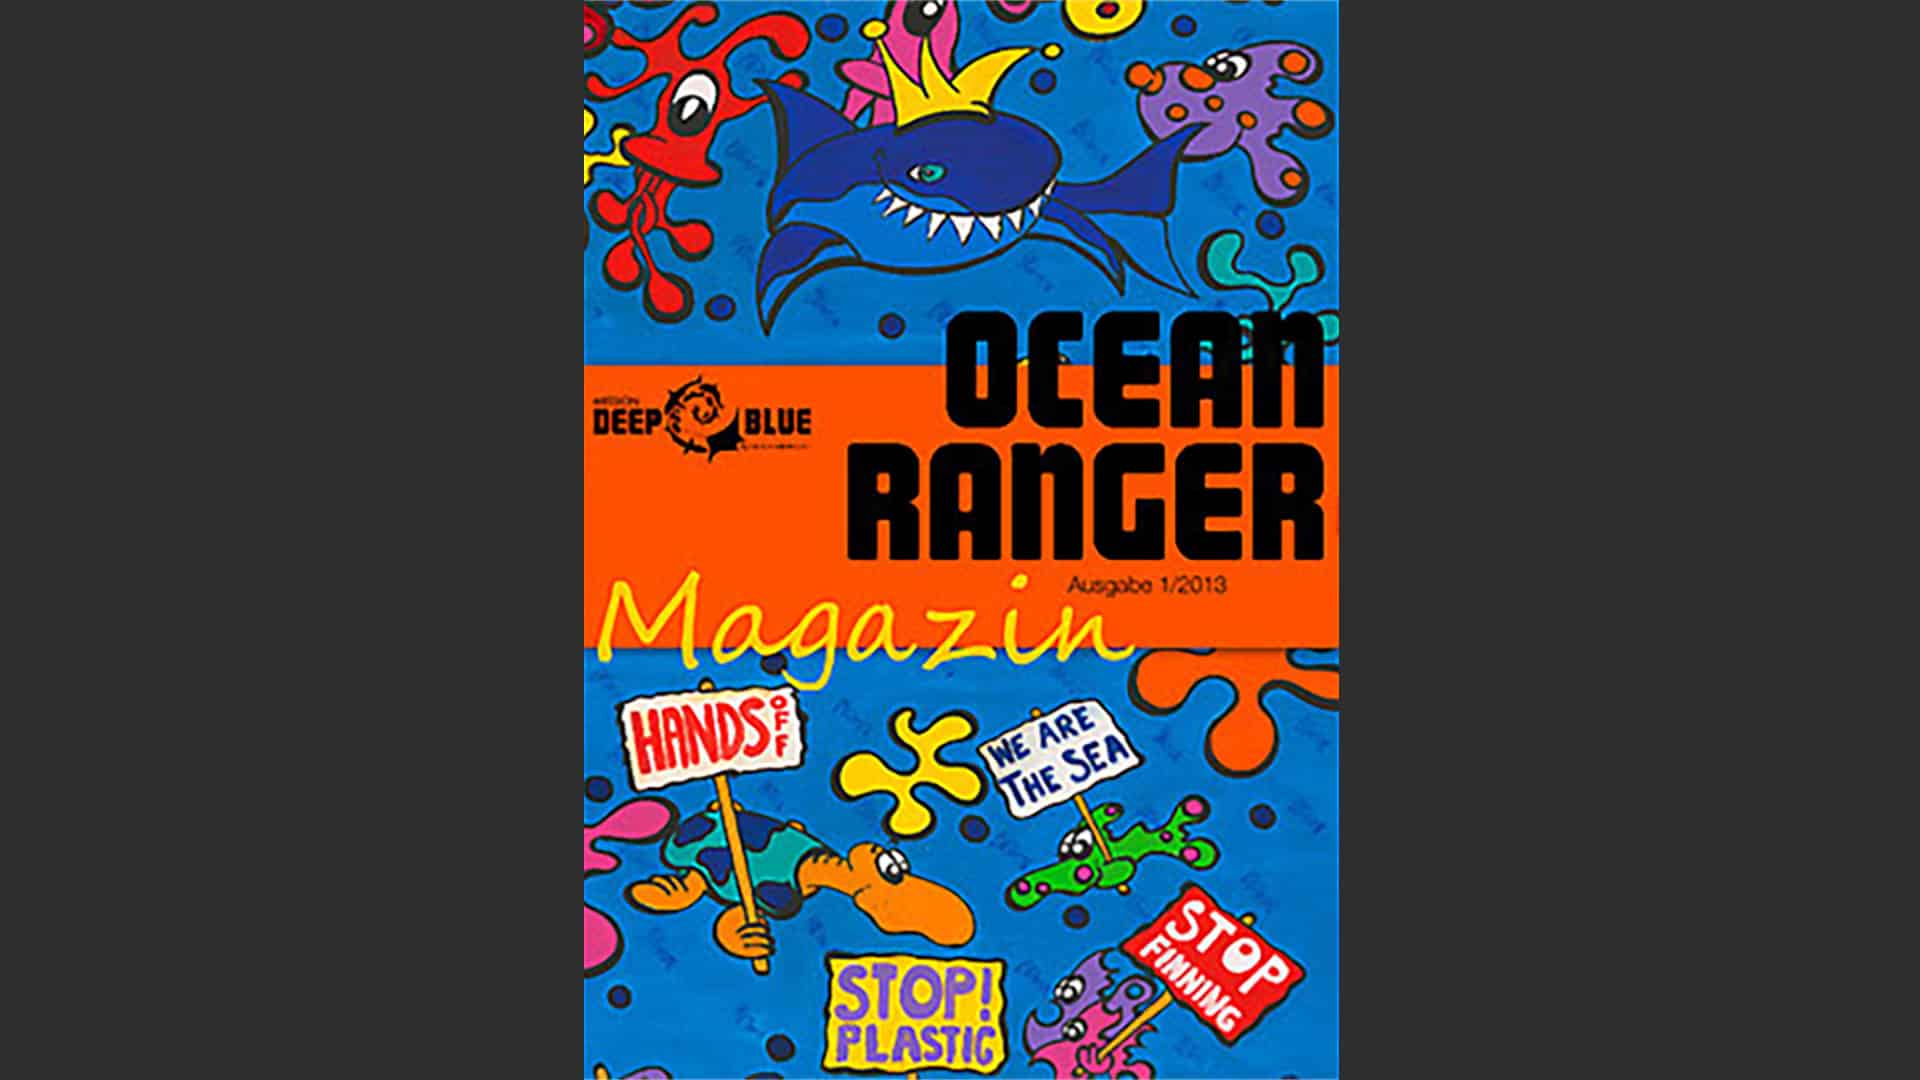 Foto: Magazin Ocean Ranger 2013